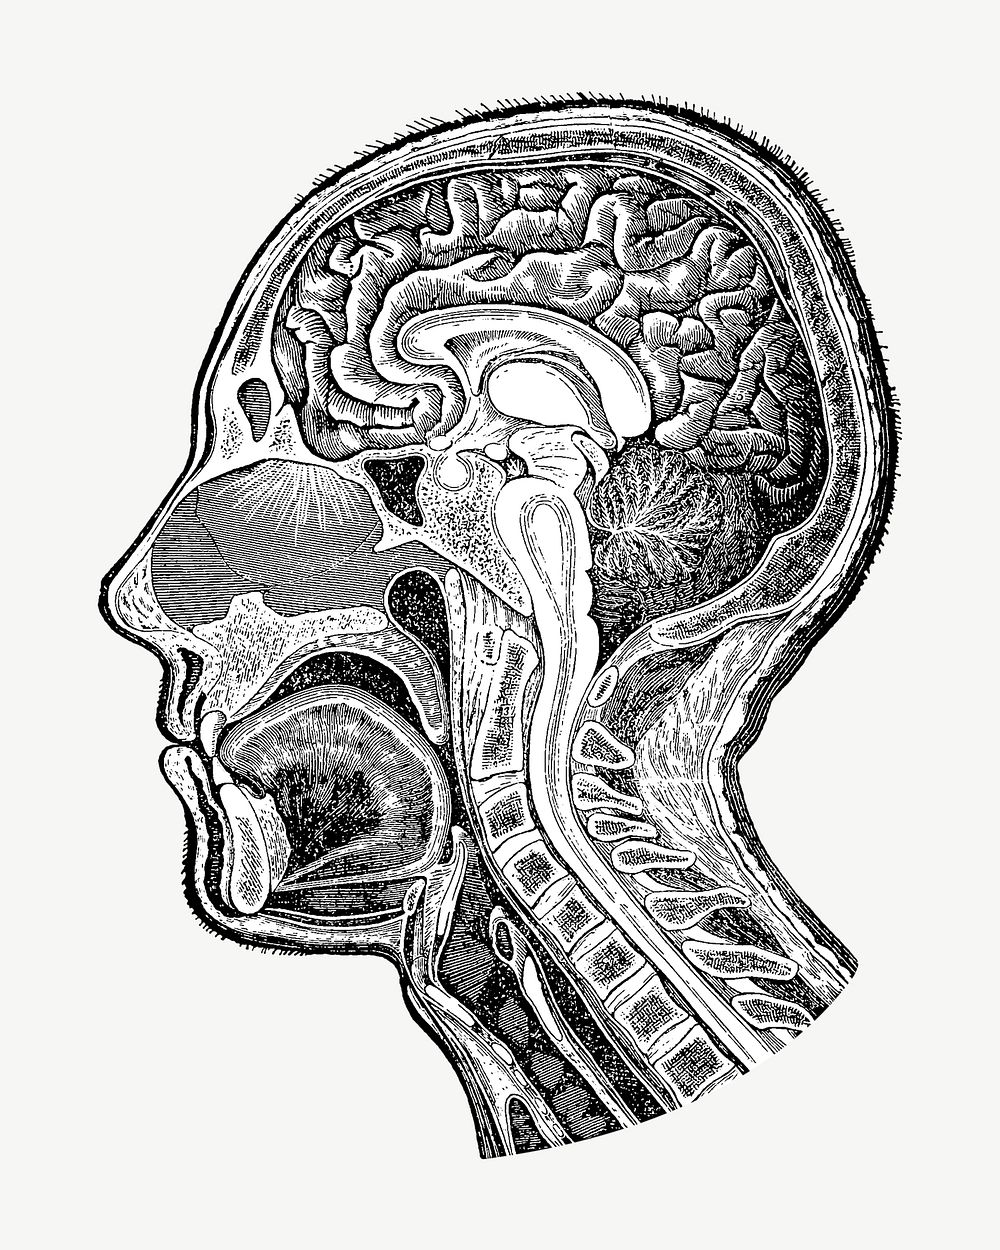 Human head anatomy, vintage medical illustration psd. Remixed by rawpixel.